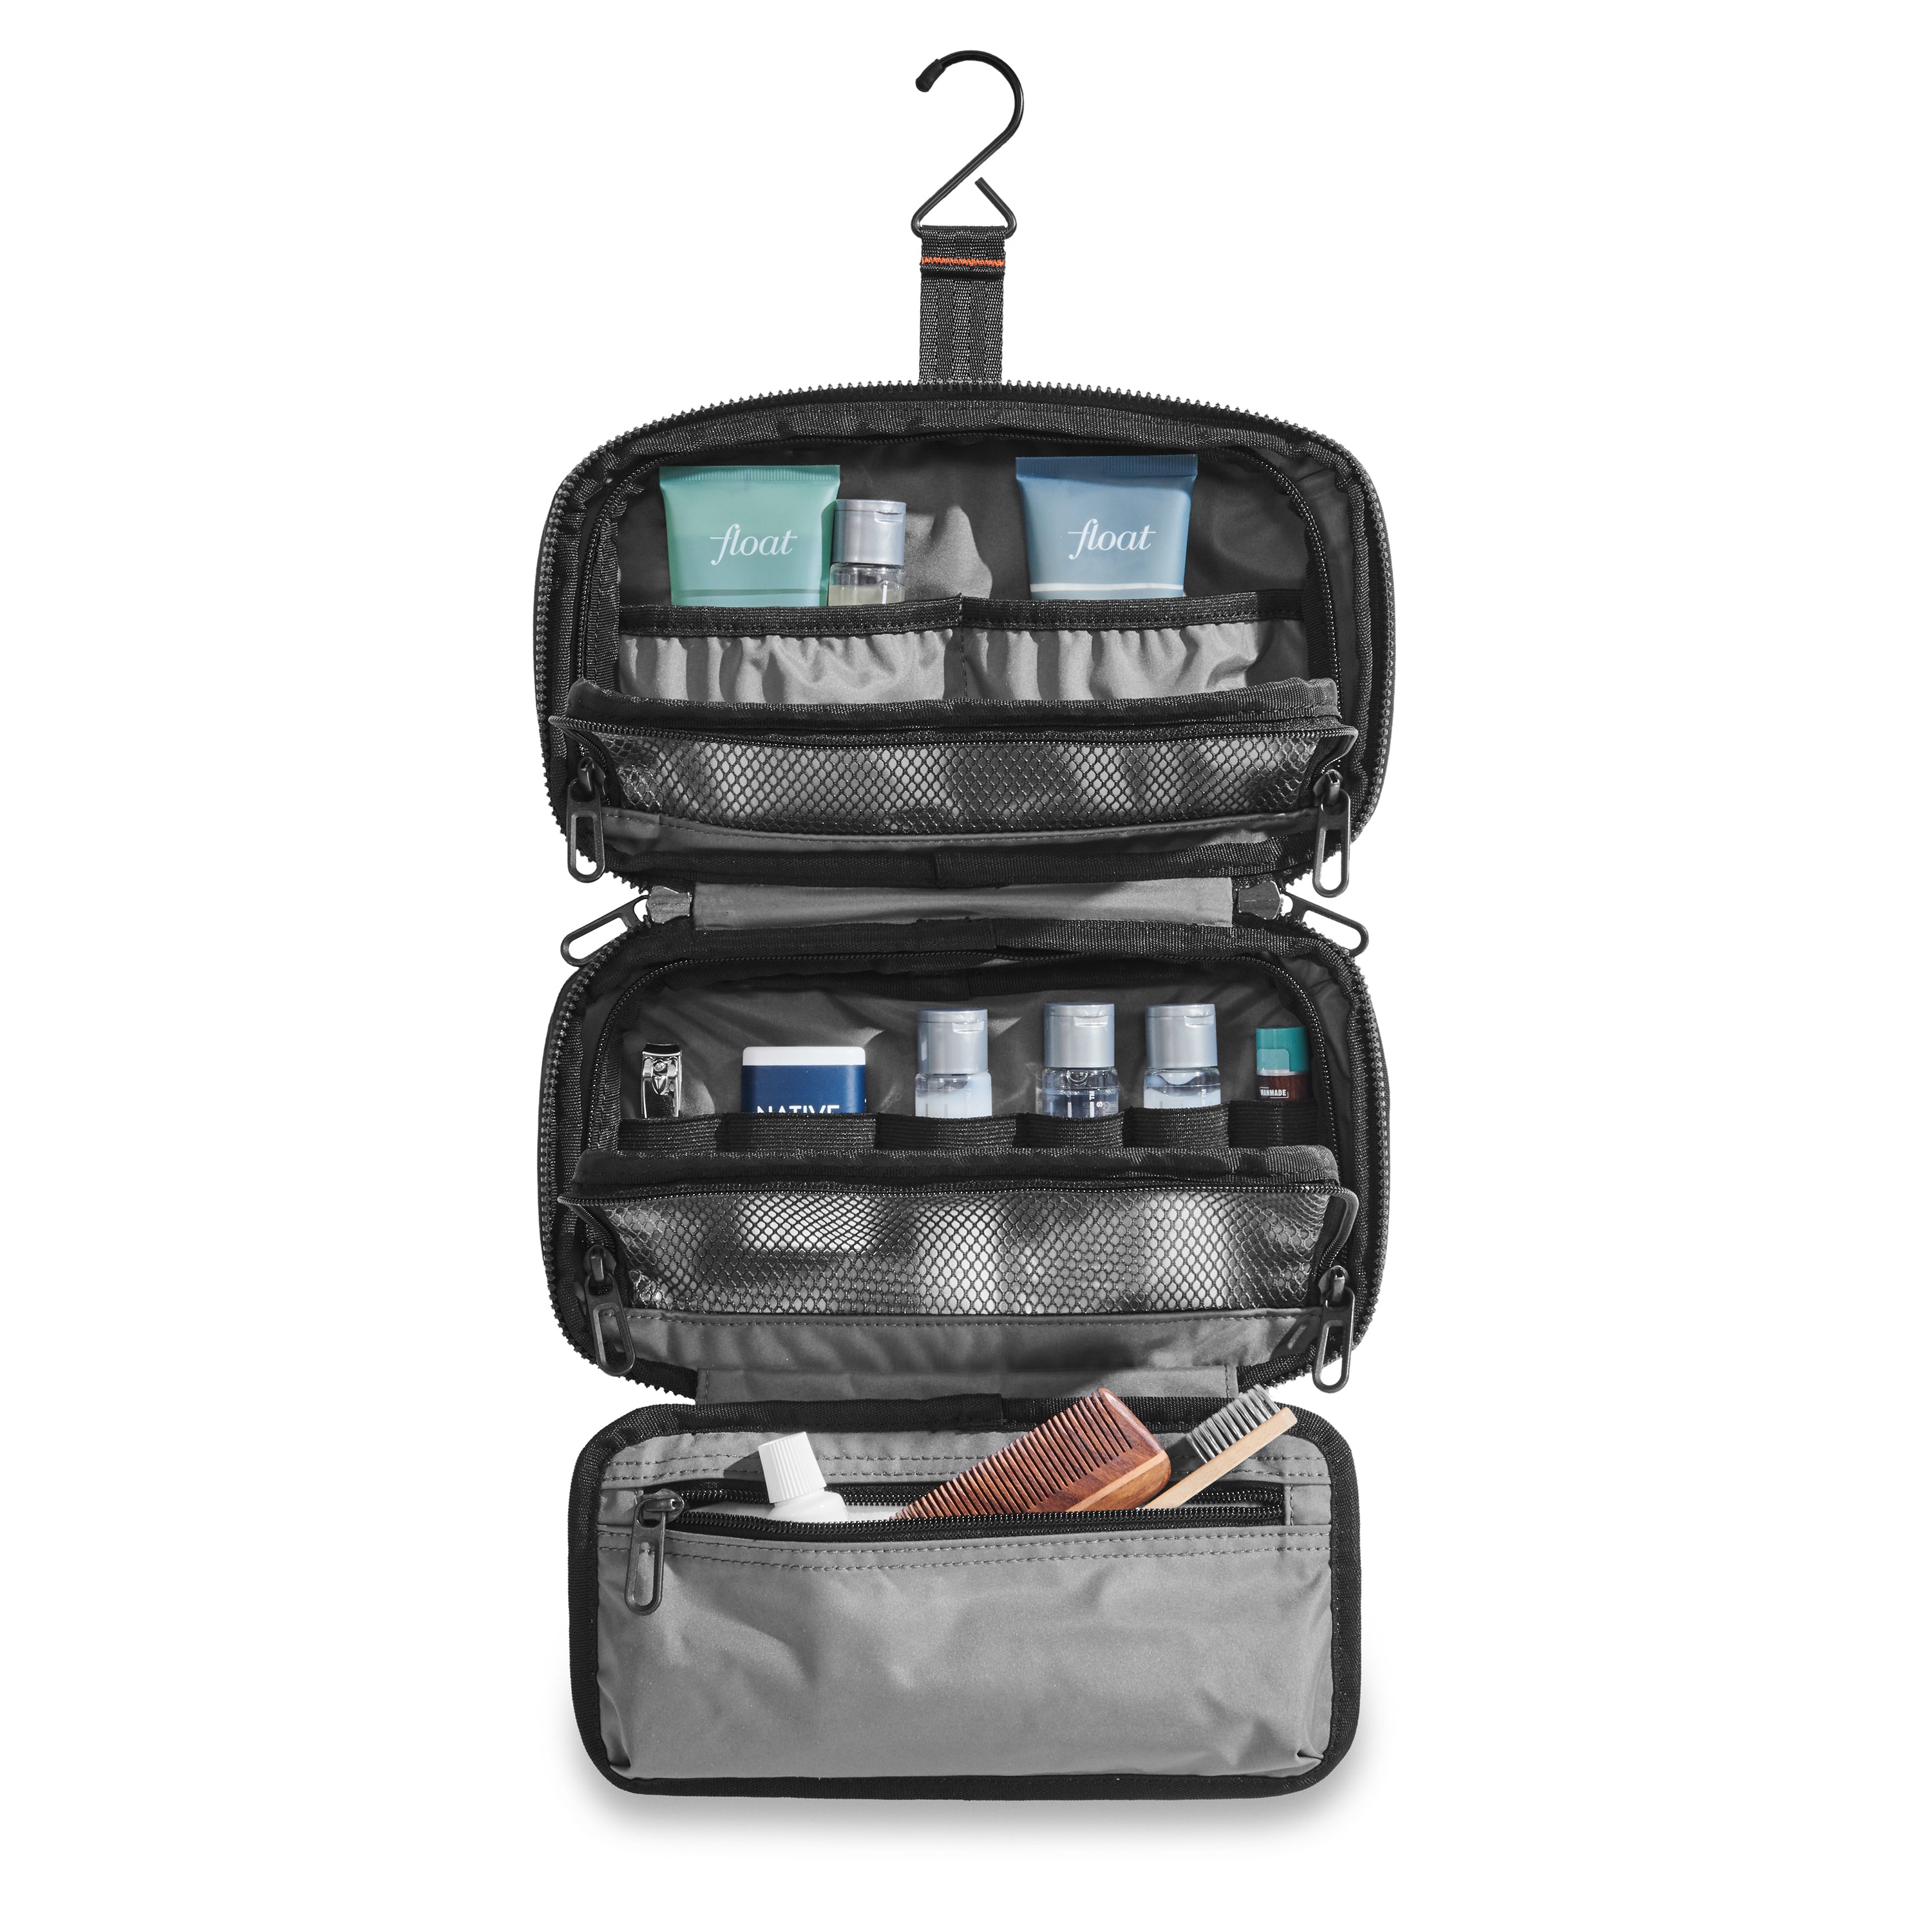 Buy Waterproof Travel Toiletry Bag for Traveling Large Shaving Bag Dopp Kit  at Amazon.in